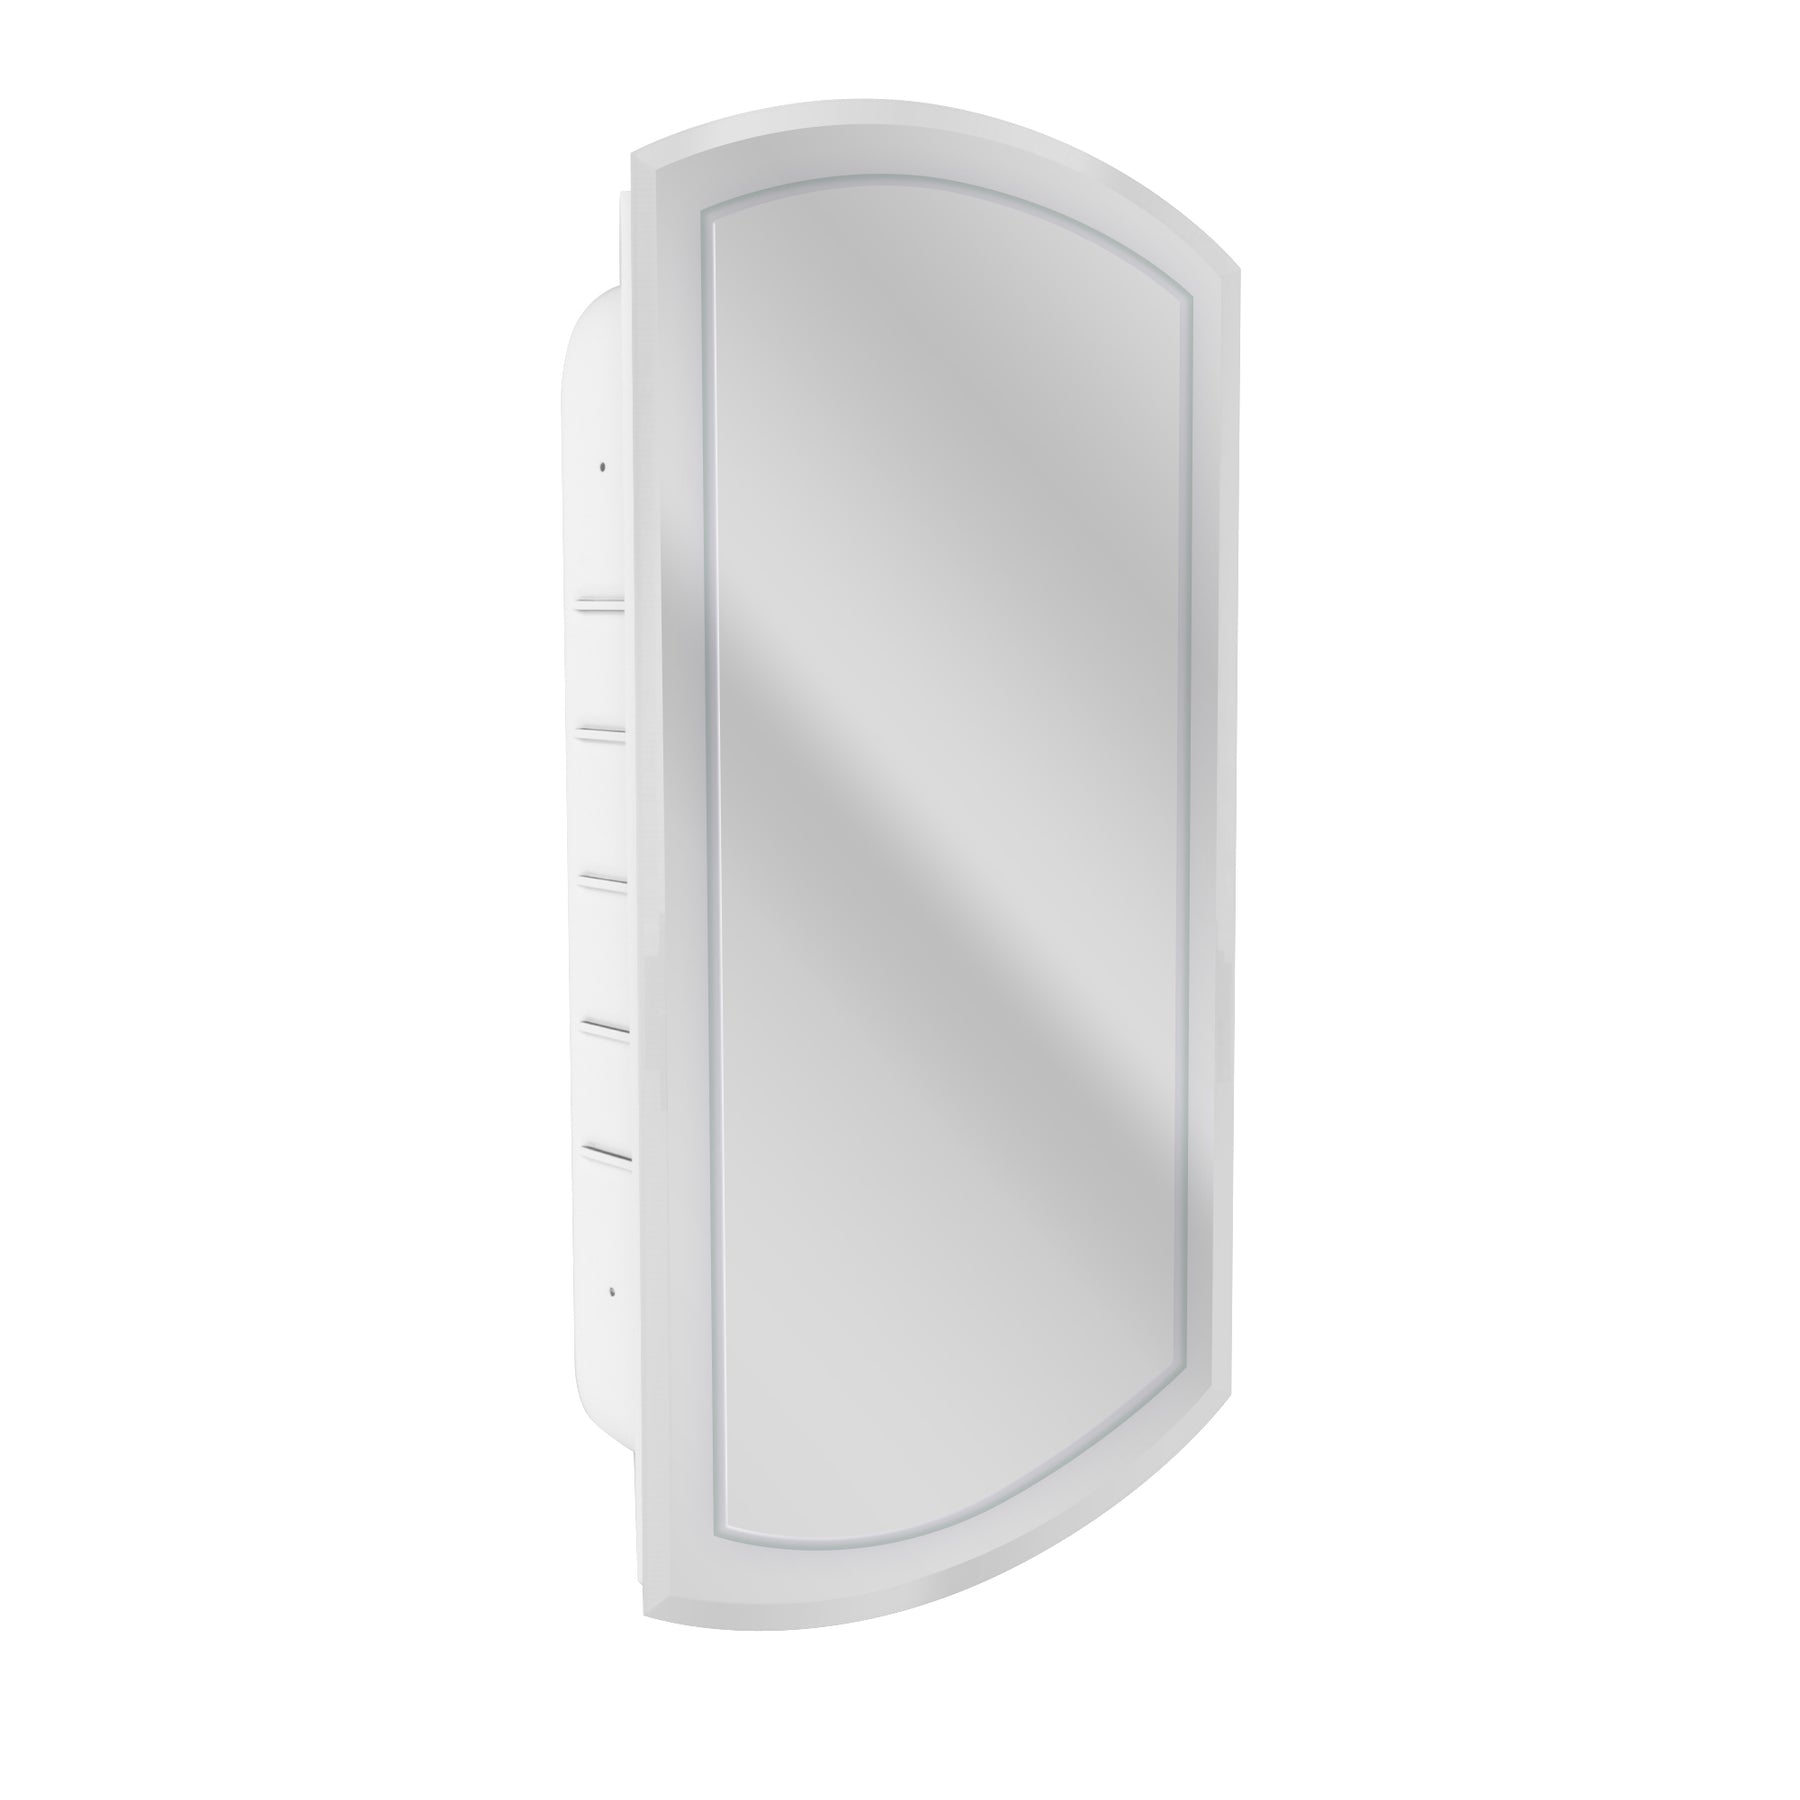  White Plastic Medicine Cabinet Shelf Replacement (1PIECE) -  Please Check PHOTOS for Dimensions